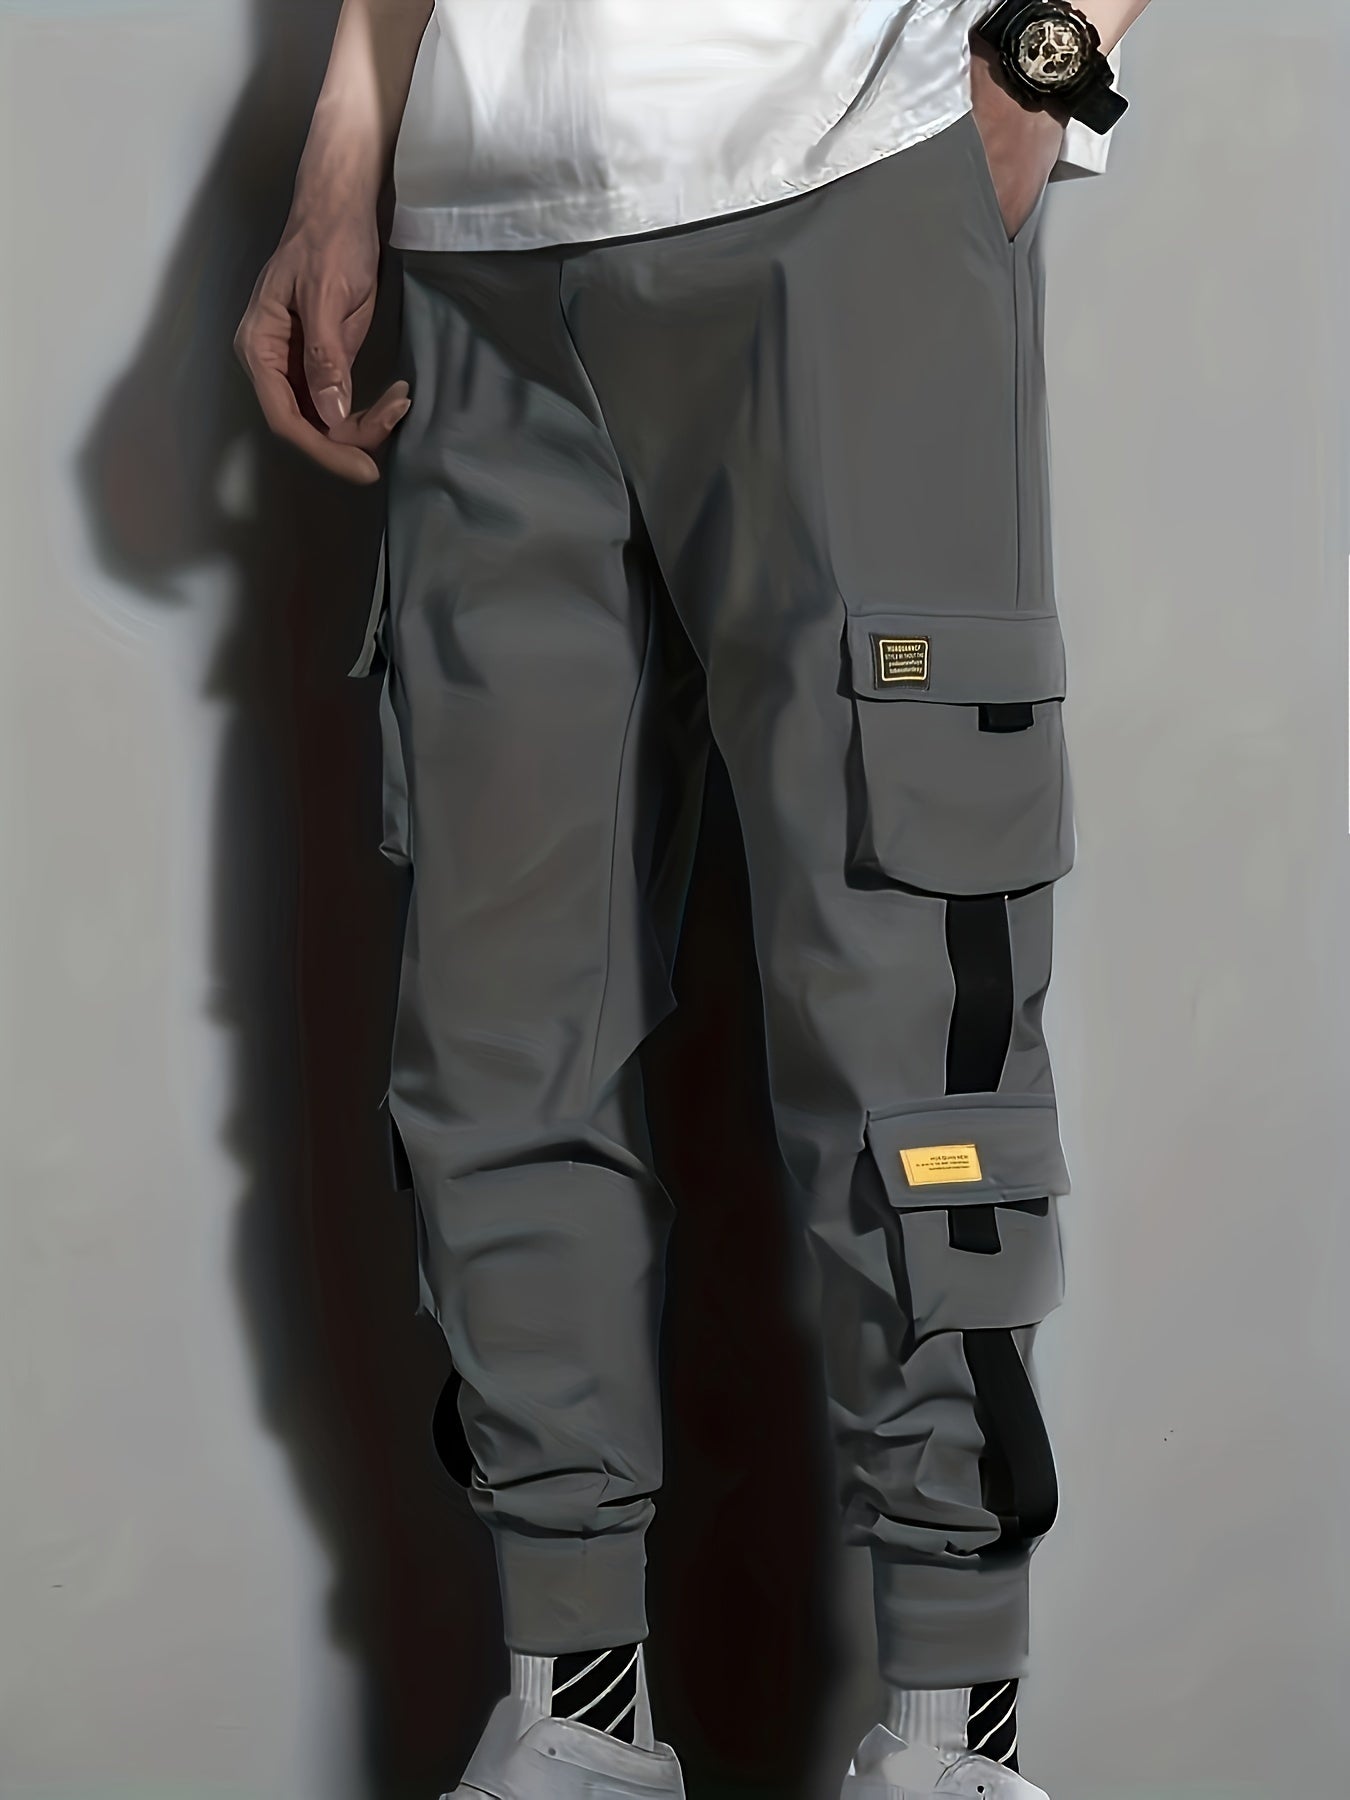 Ribbon Design, Men's Drawstring Overalls With Pockets, Loose Trendy Comfy Jogger Pants